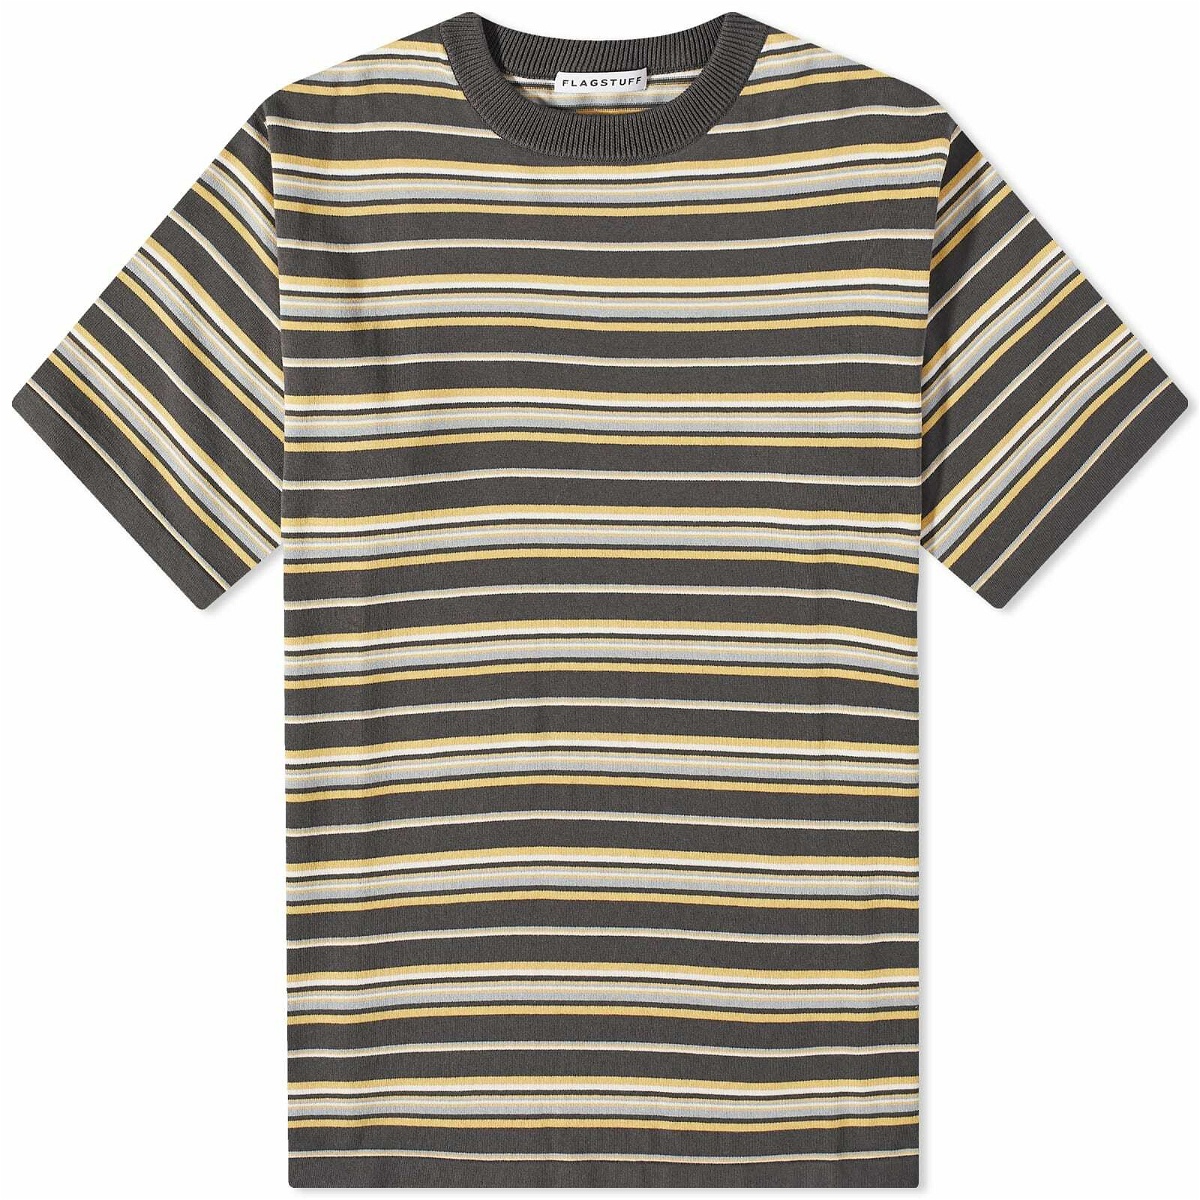 Flagstuff Men's Border Stripe T-Shirt in Charcoal Flagstuff